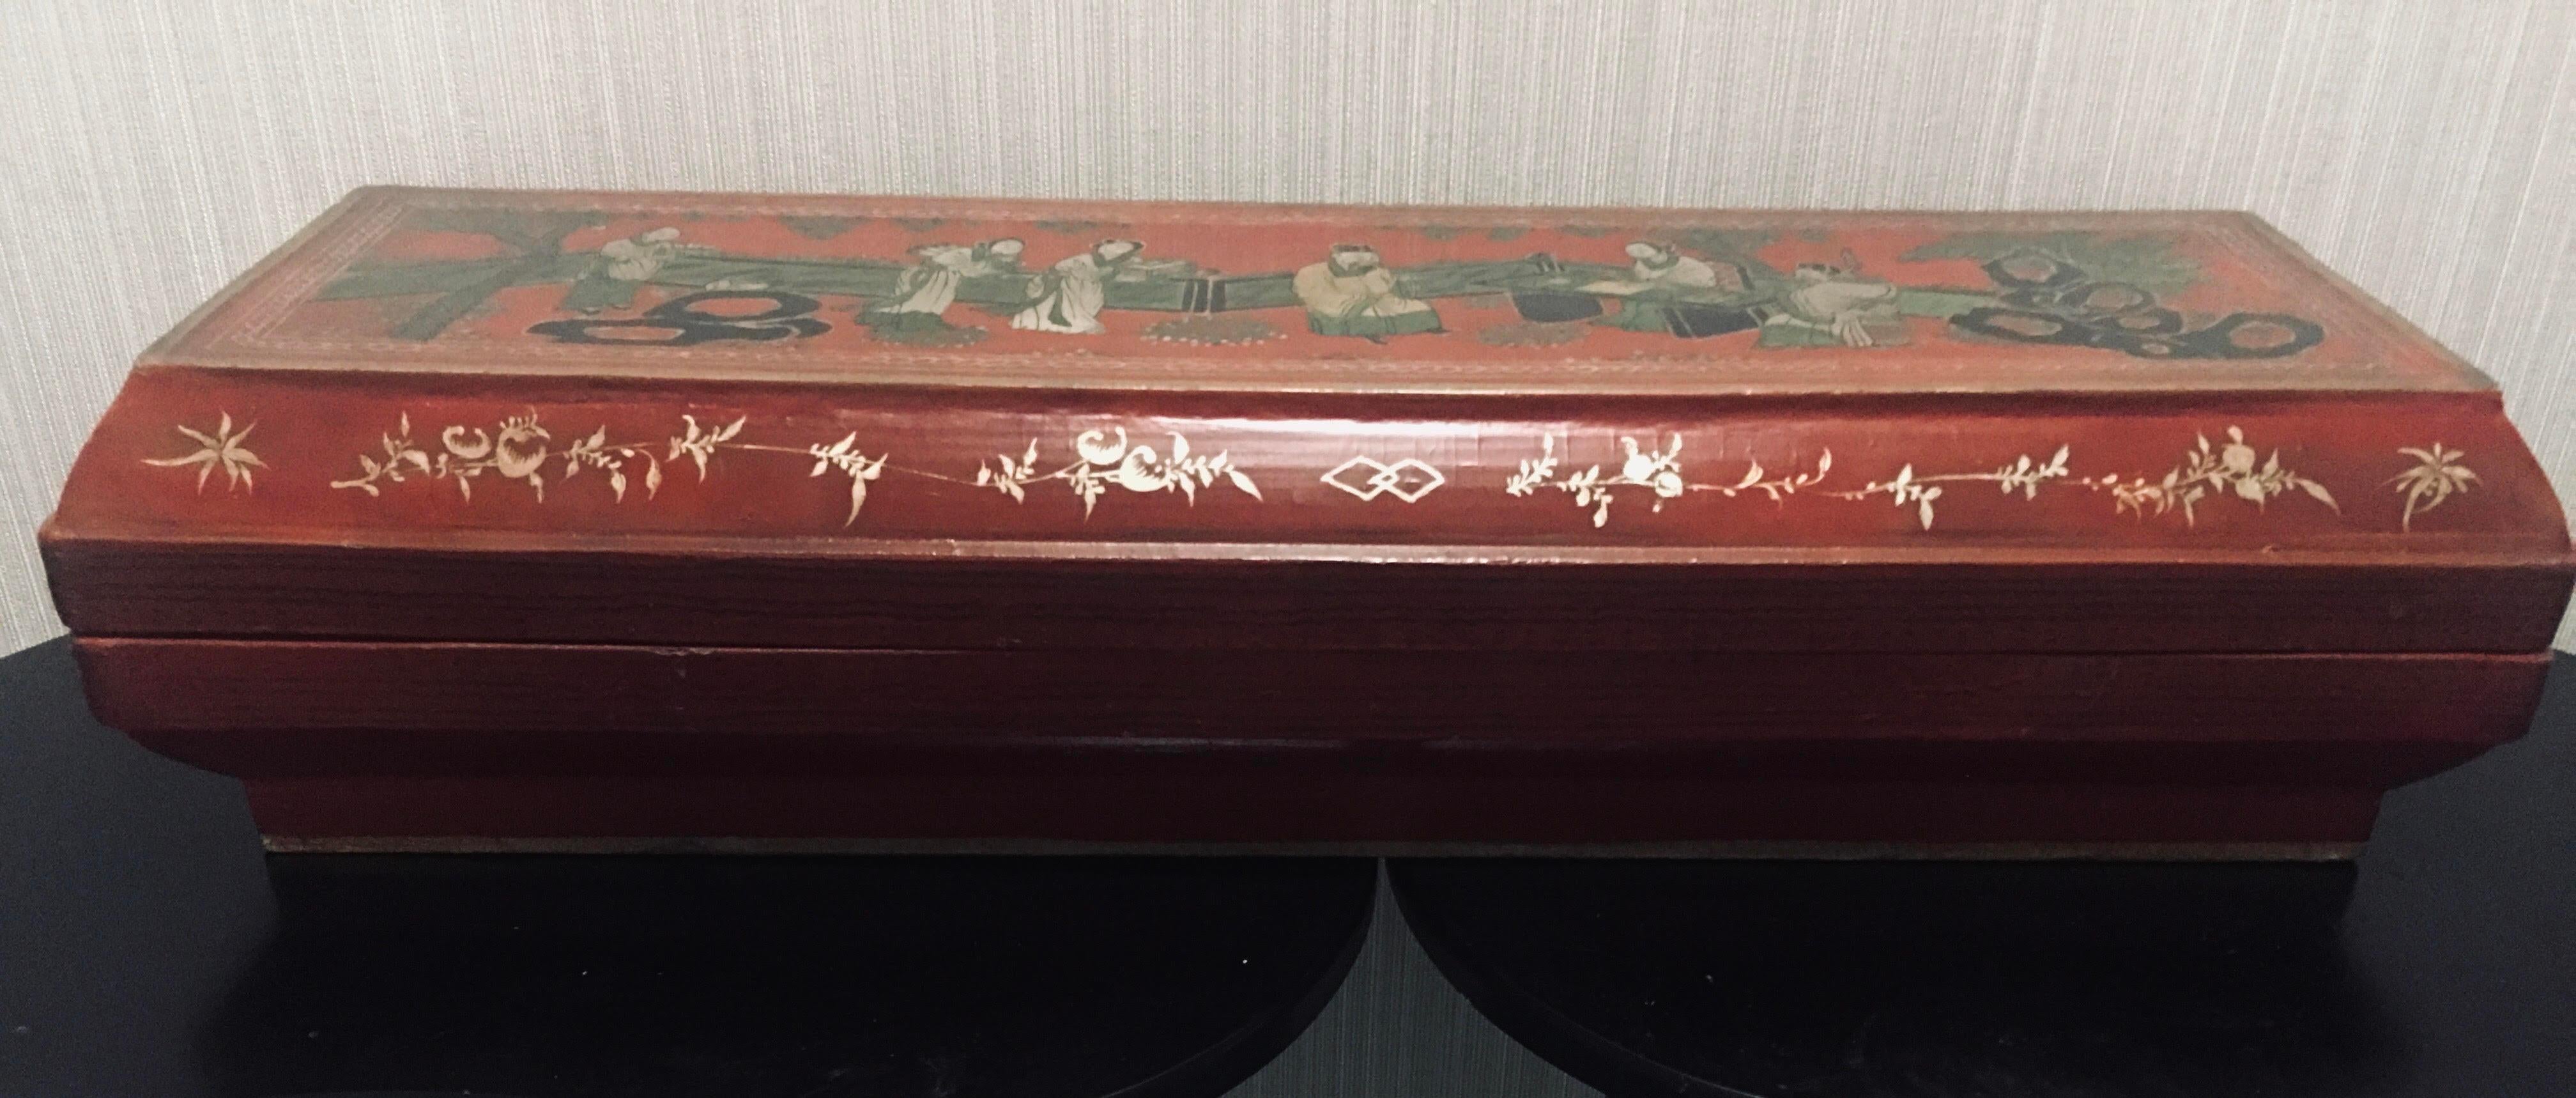 Chinesisch Mitte bis Ende 19. Jahrhundert Qing Dynasty Scroll Box (Qing-Dynastie) im Angebot